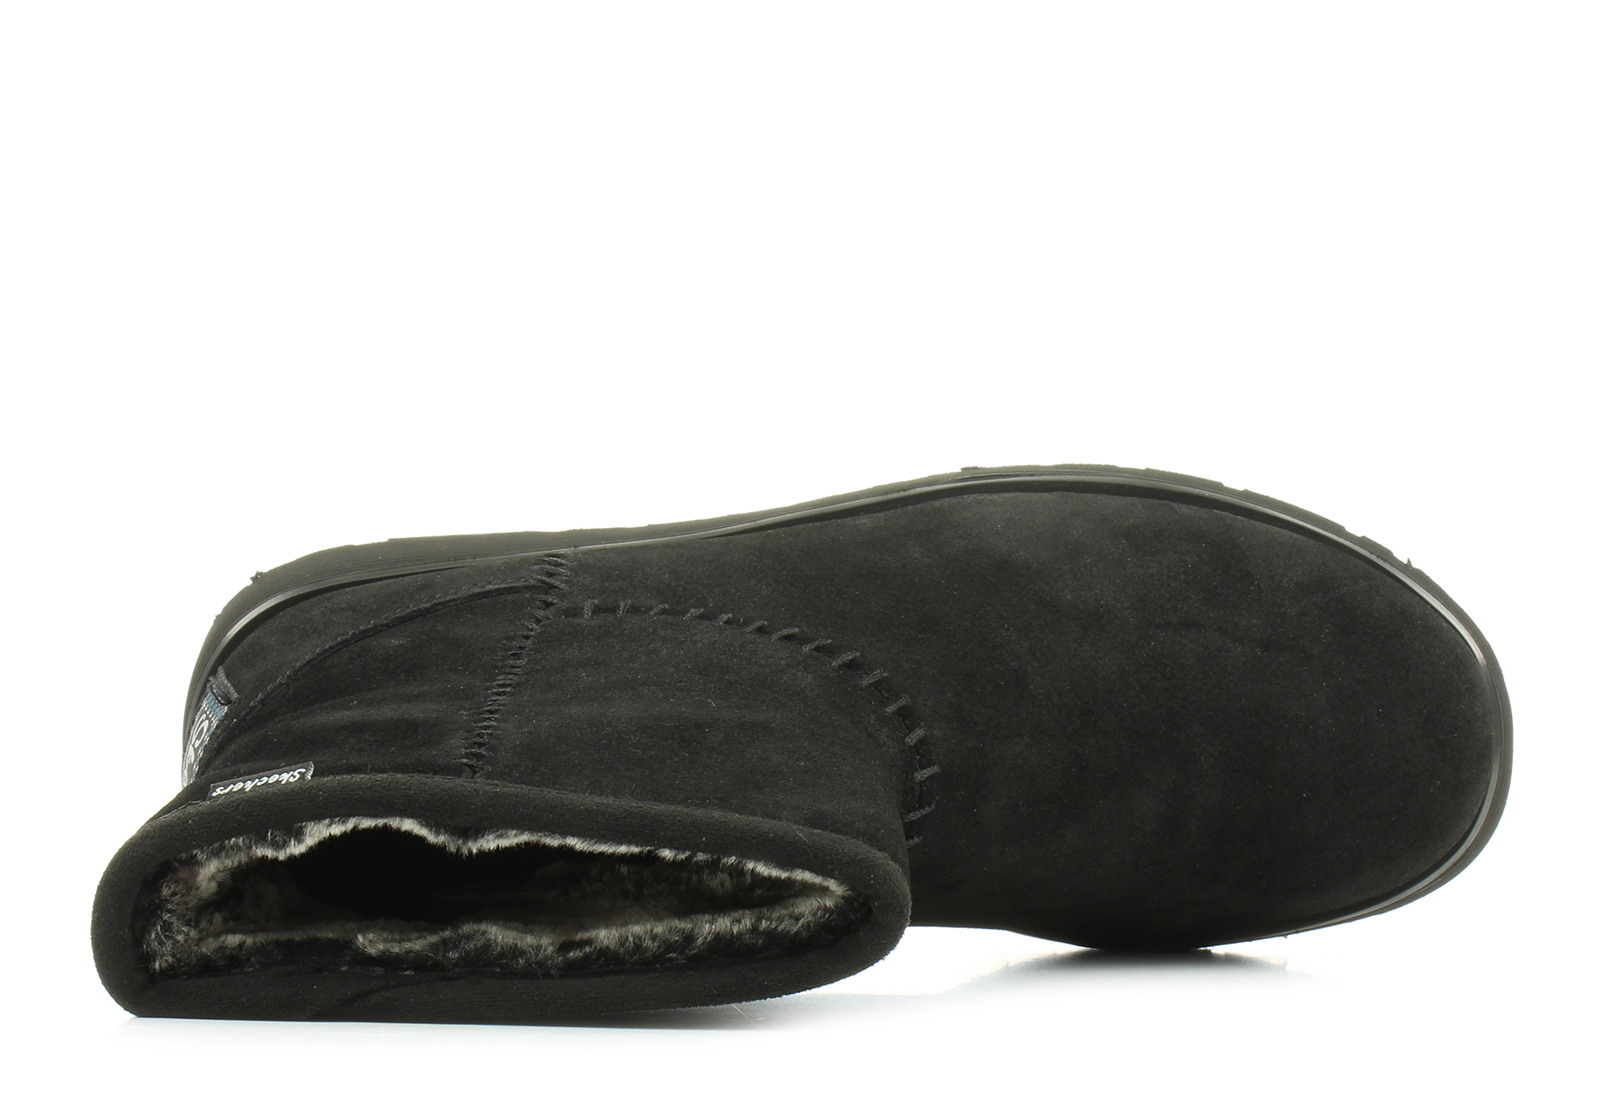 Skechers - Cabin Fever - 49814-blk - Office Shoes Magyarország